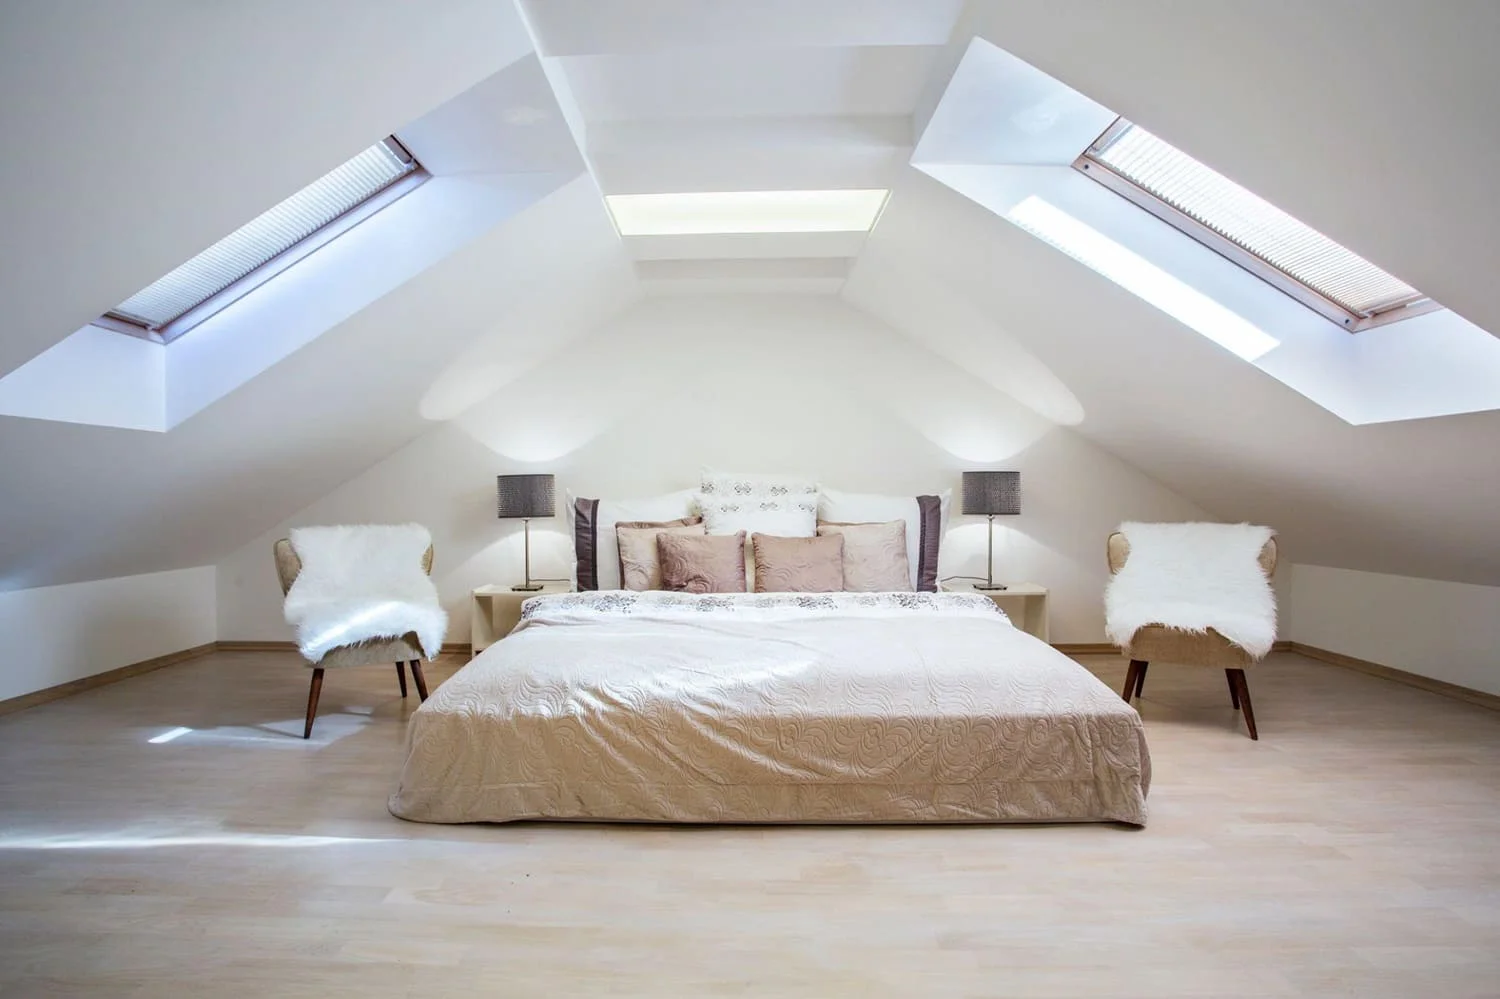 Attic bedroom design — features of decoration, furnishing, lighting